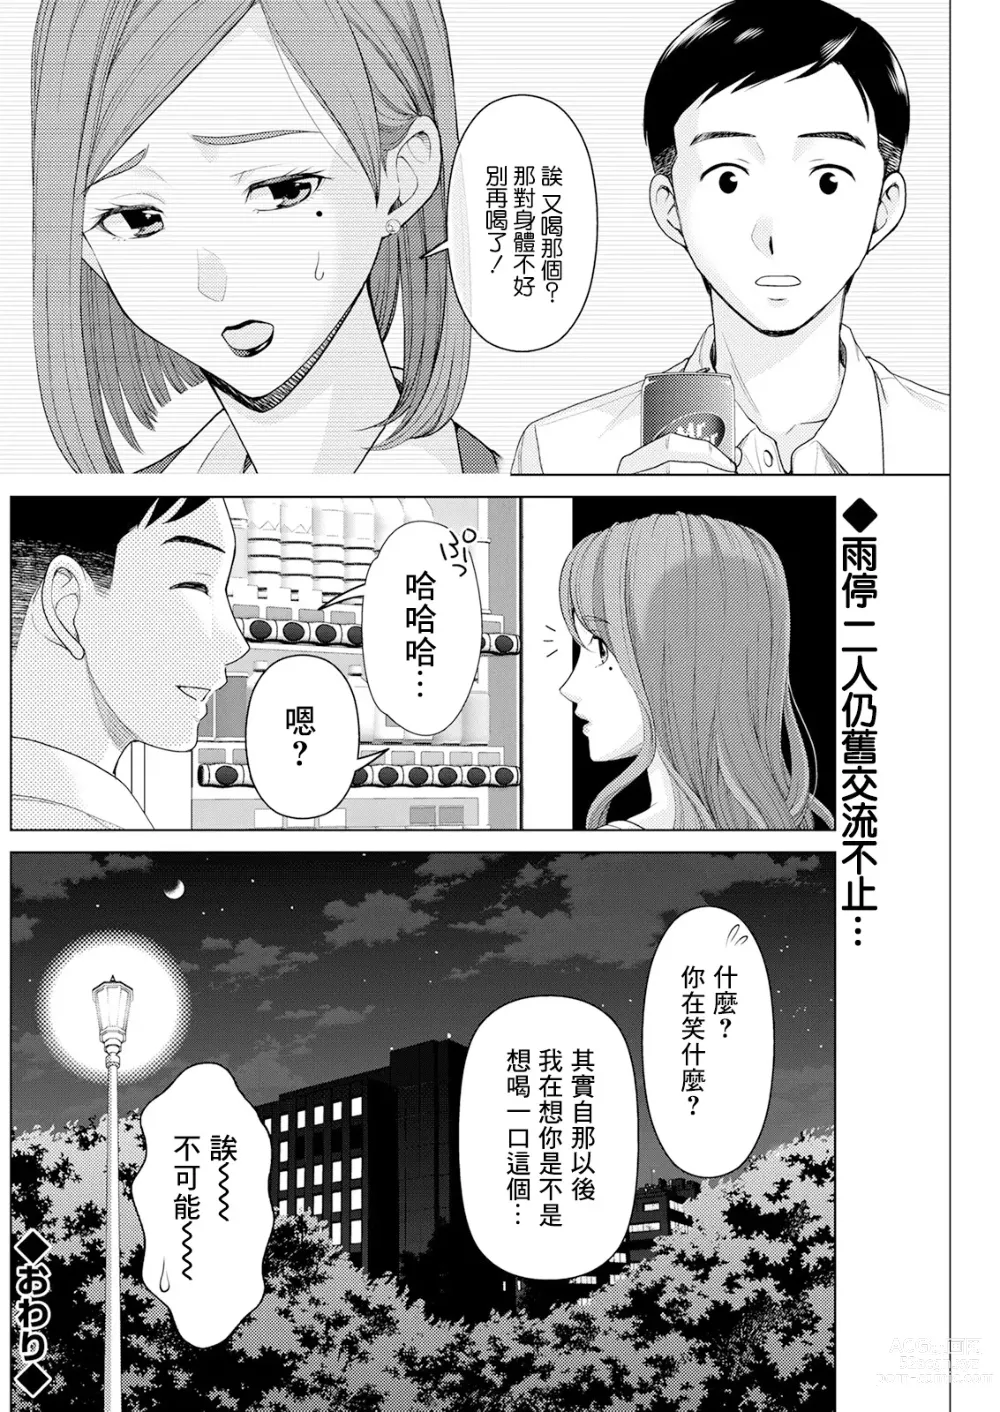 Page 18 of manga Kawari, Hateru.